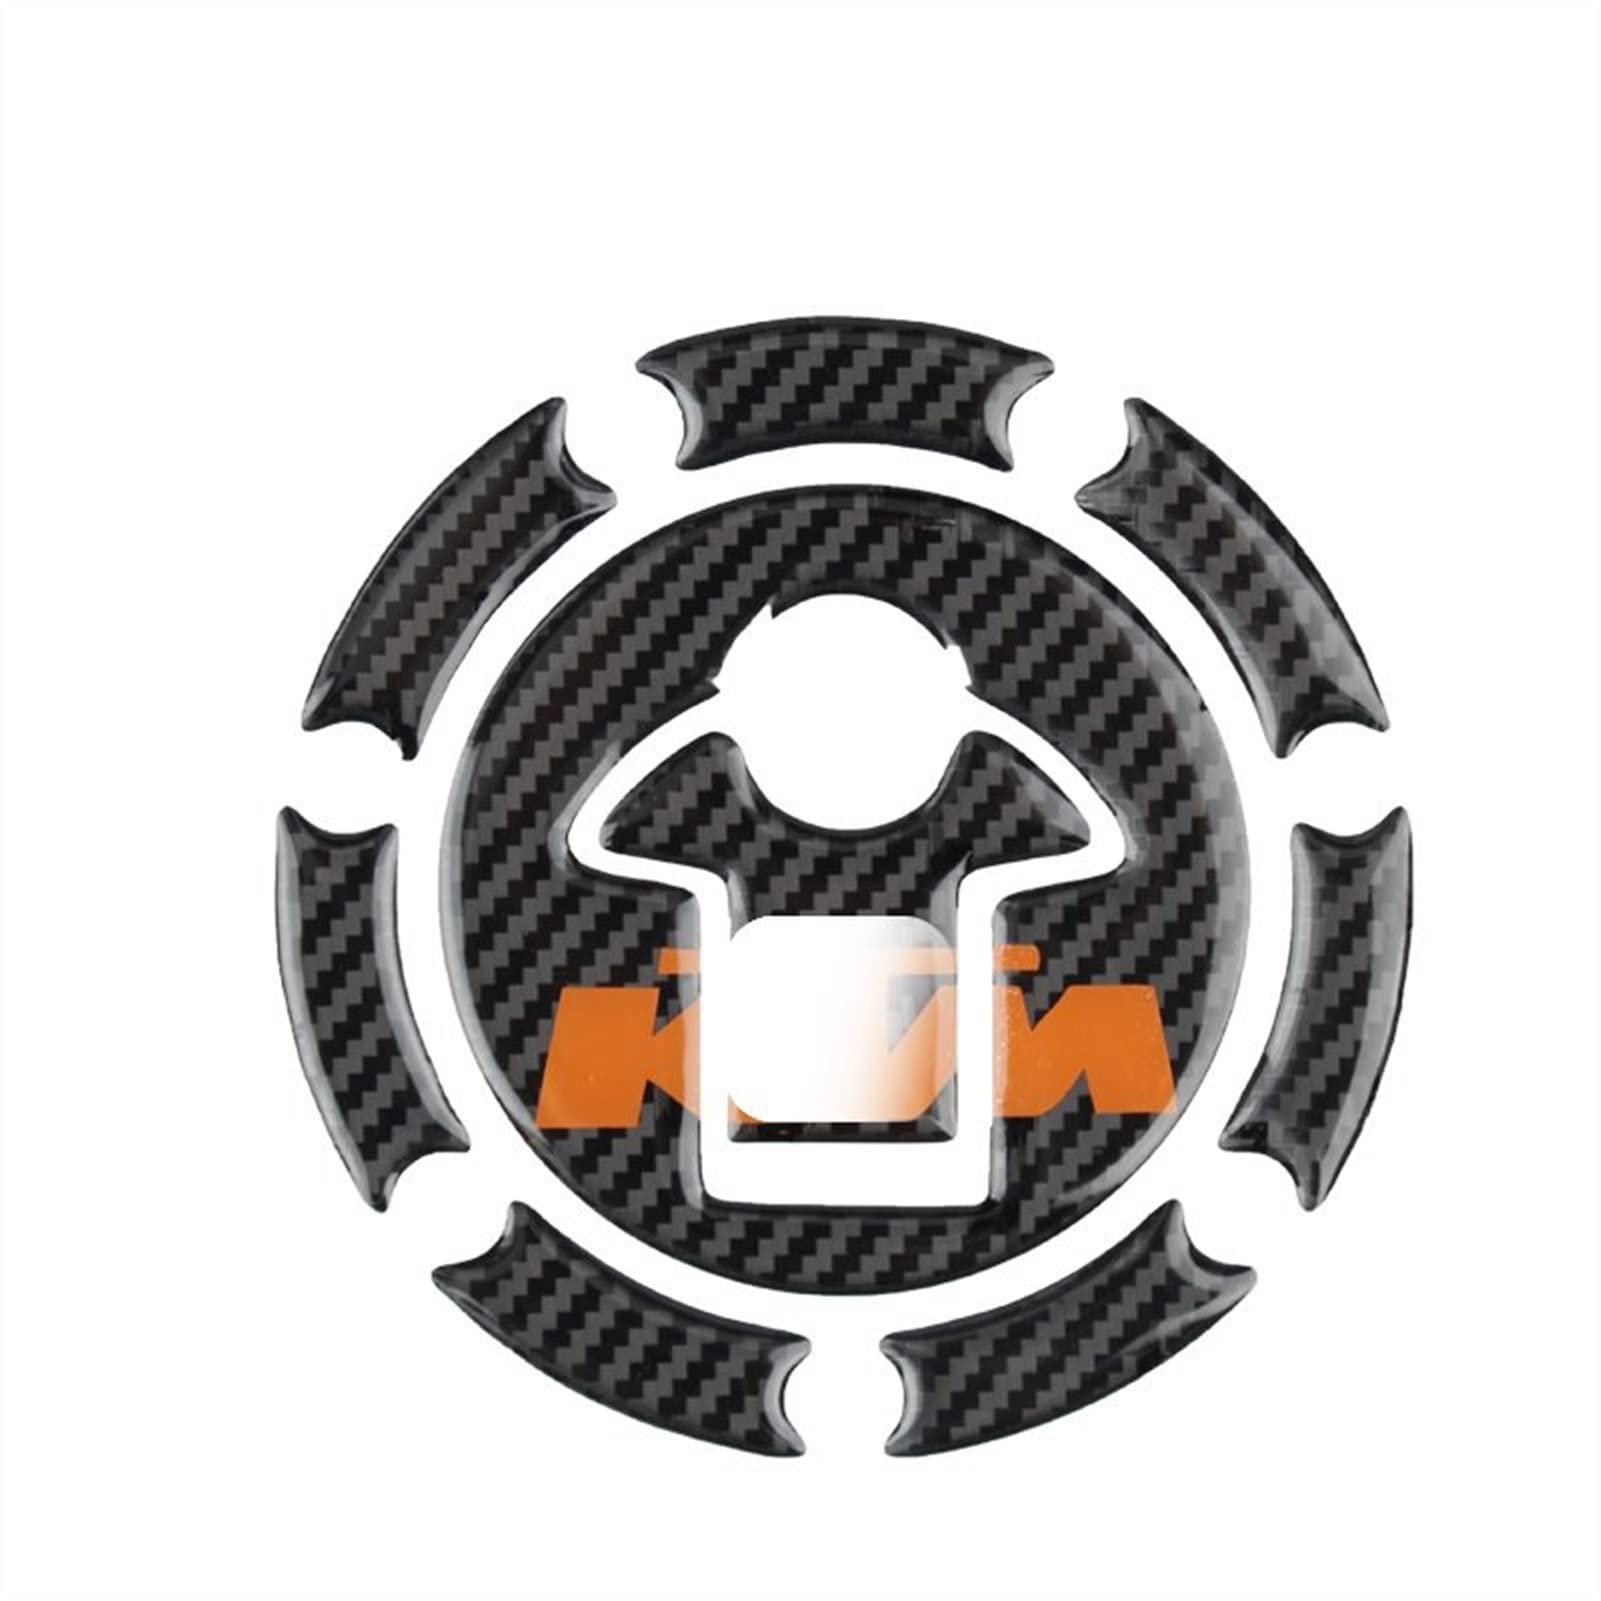 POLOUK Motorrad 3D Kohlefaser Gas Heizöl Tankdeckel Abdeckung Pad Schutz Aufkleber Aufkleber Für Du&ke 390 13-14 200 12-14 (Color : D) von POLOUK